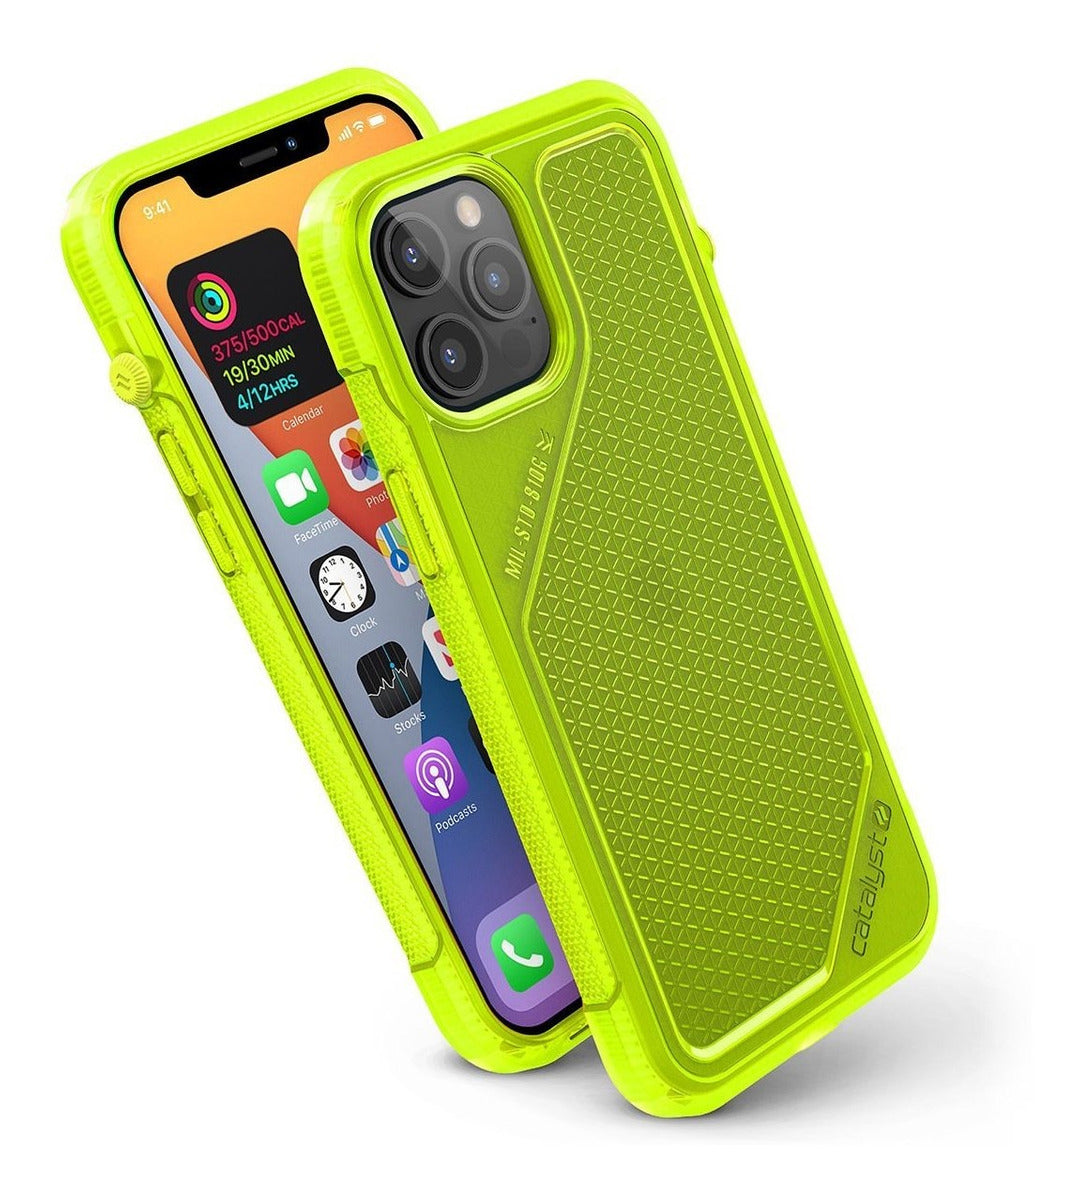 Cool Neon Protector Pantalla Cristal Templado para iPhone 12 Pro Max